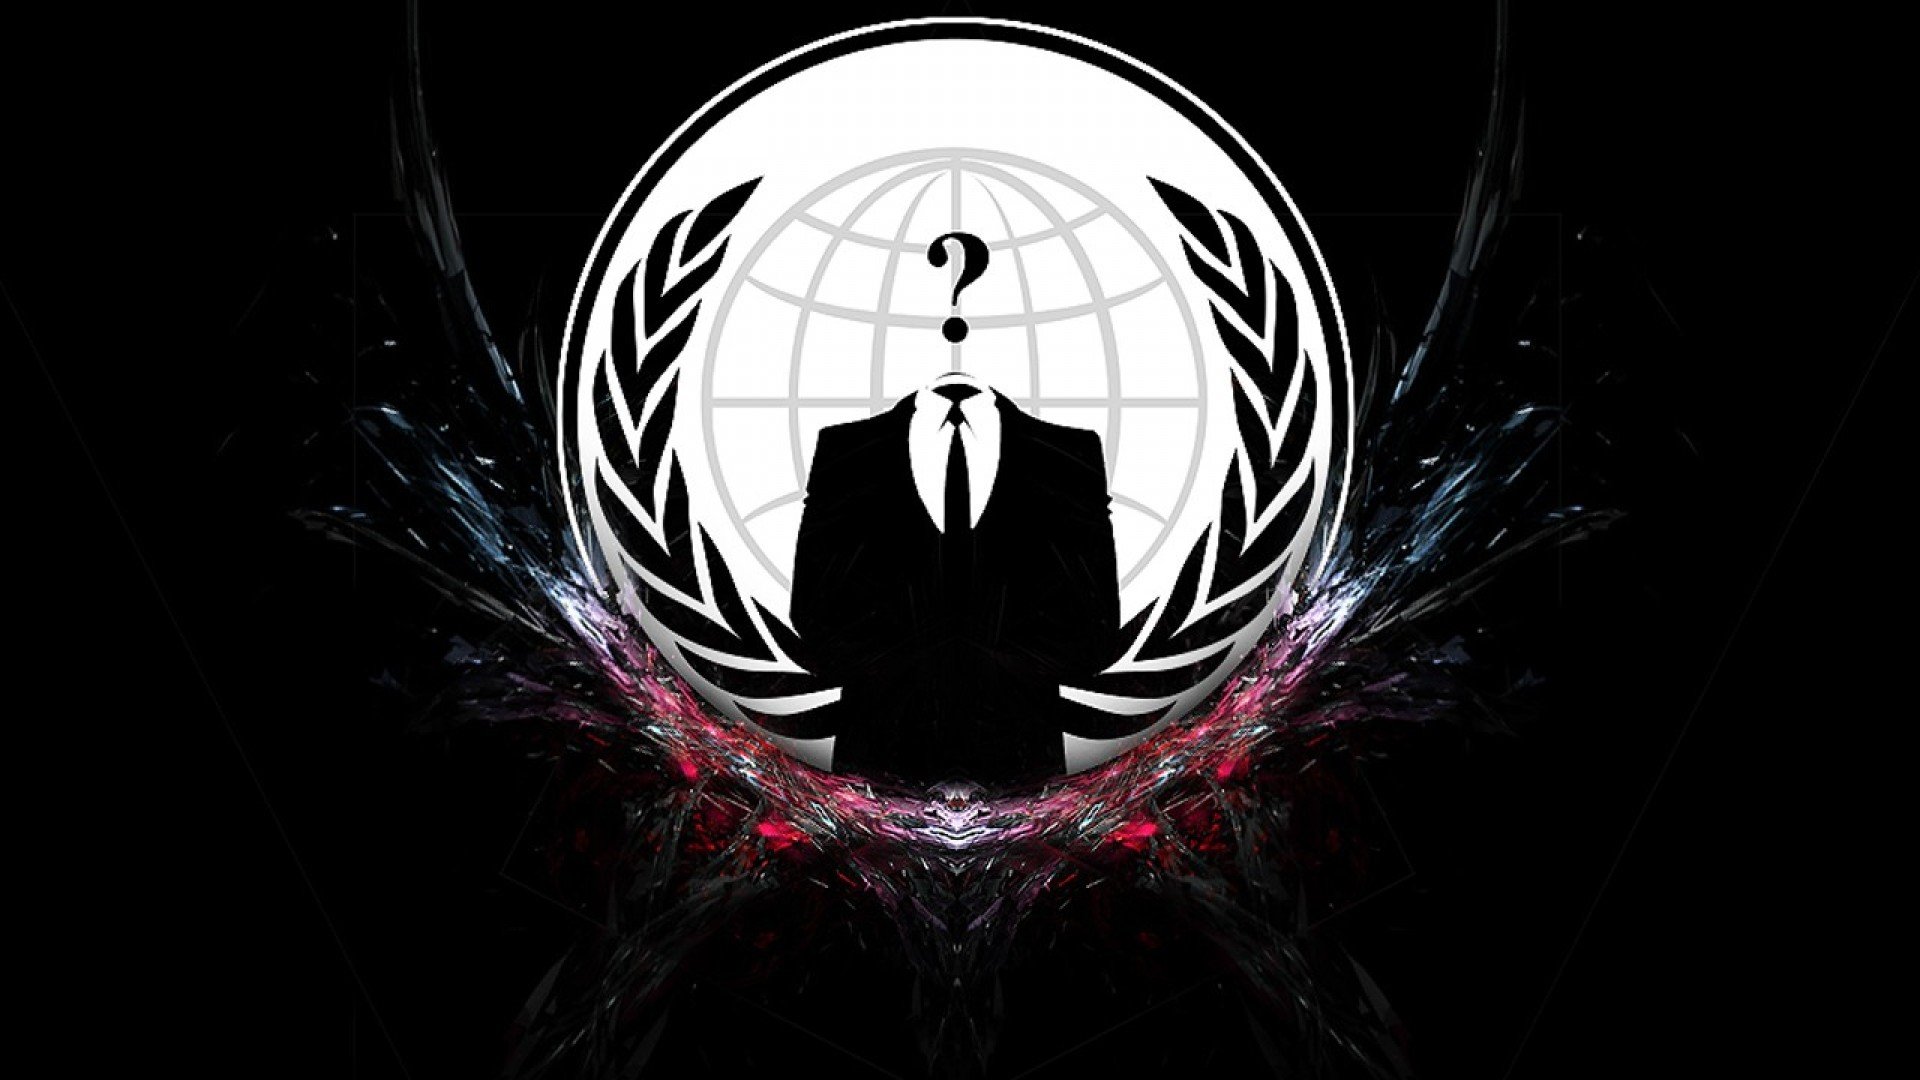 au-20-grunner-til-black-anonymous-logo-wallpaper-free-download